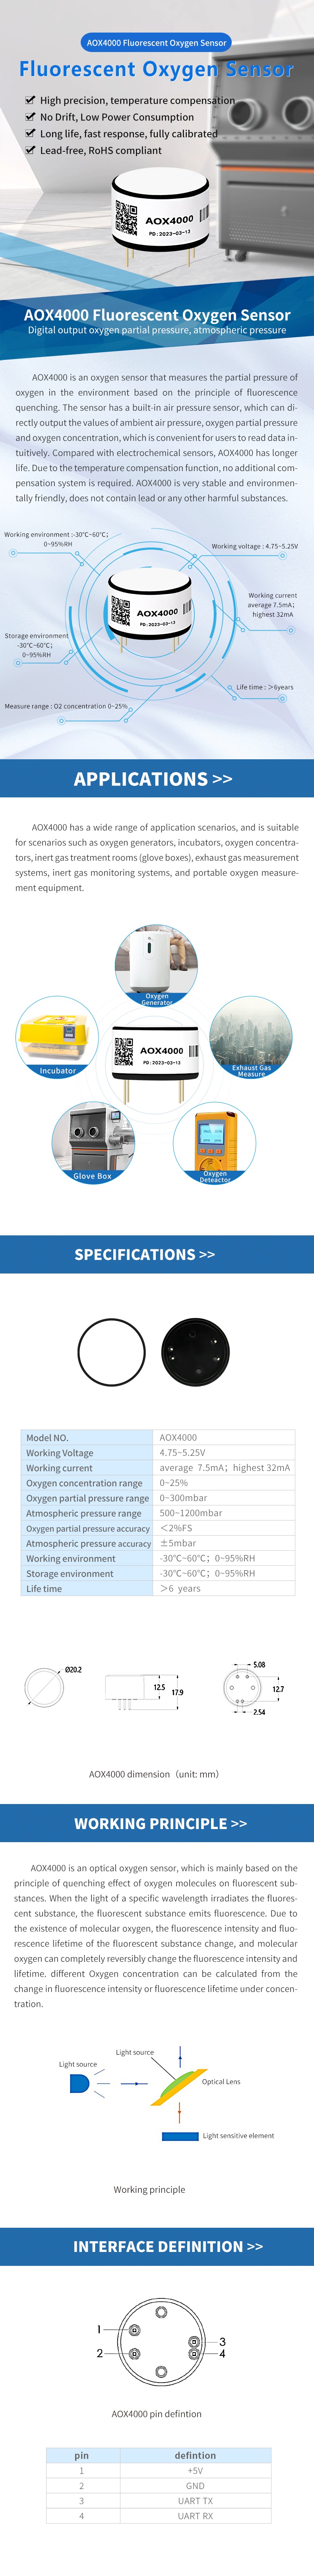 AOX4000 digital signal output oxygen concentration barometric pressure detection fluorescent oxygen sensor